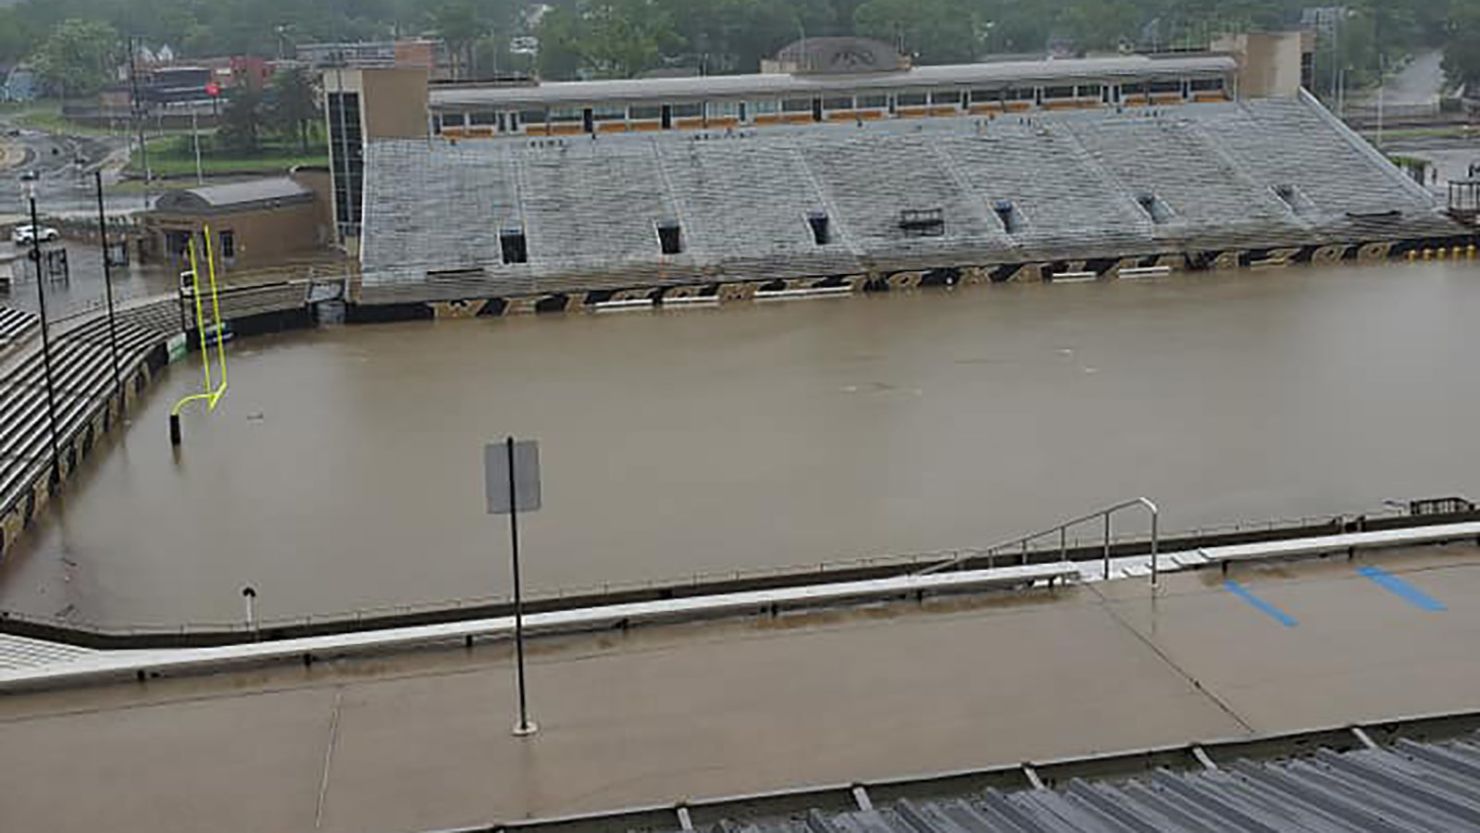 Heavy rains flooded Western Michigan University's football stadium early Thursday. 